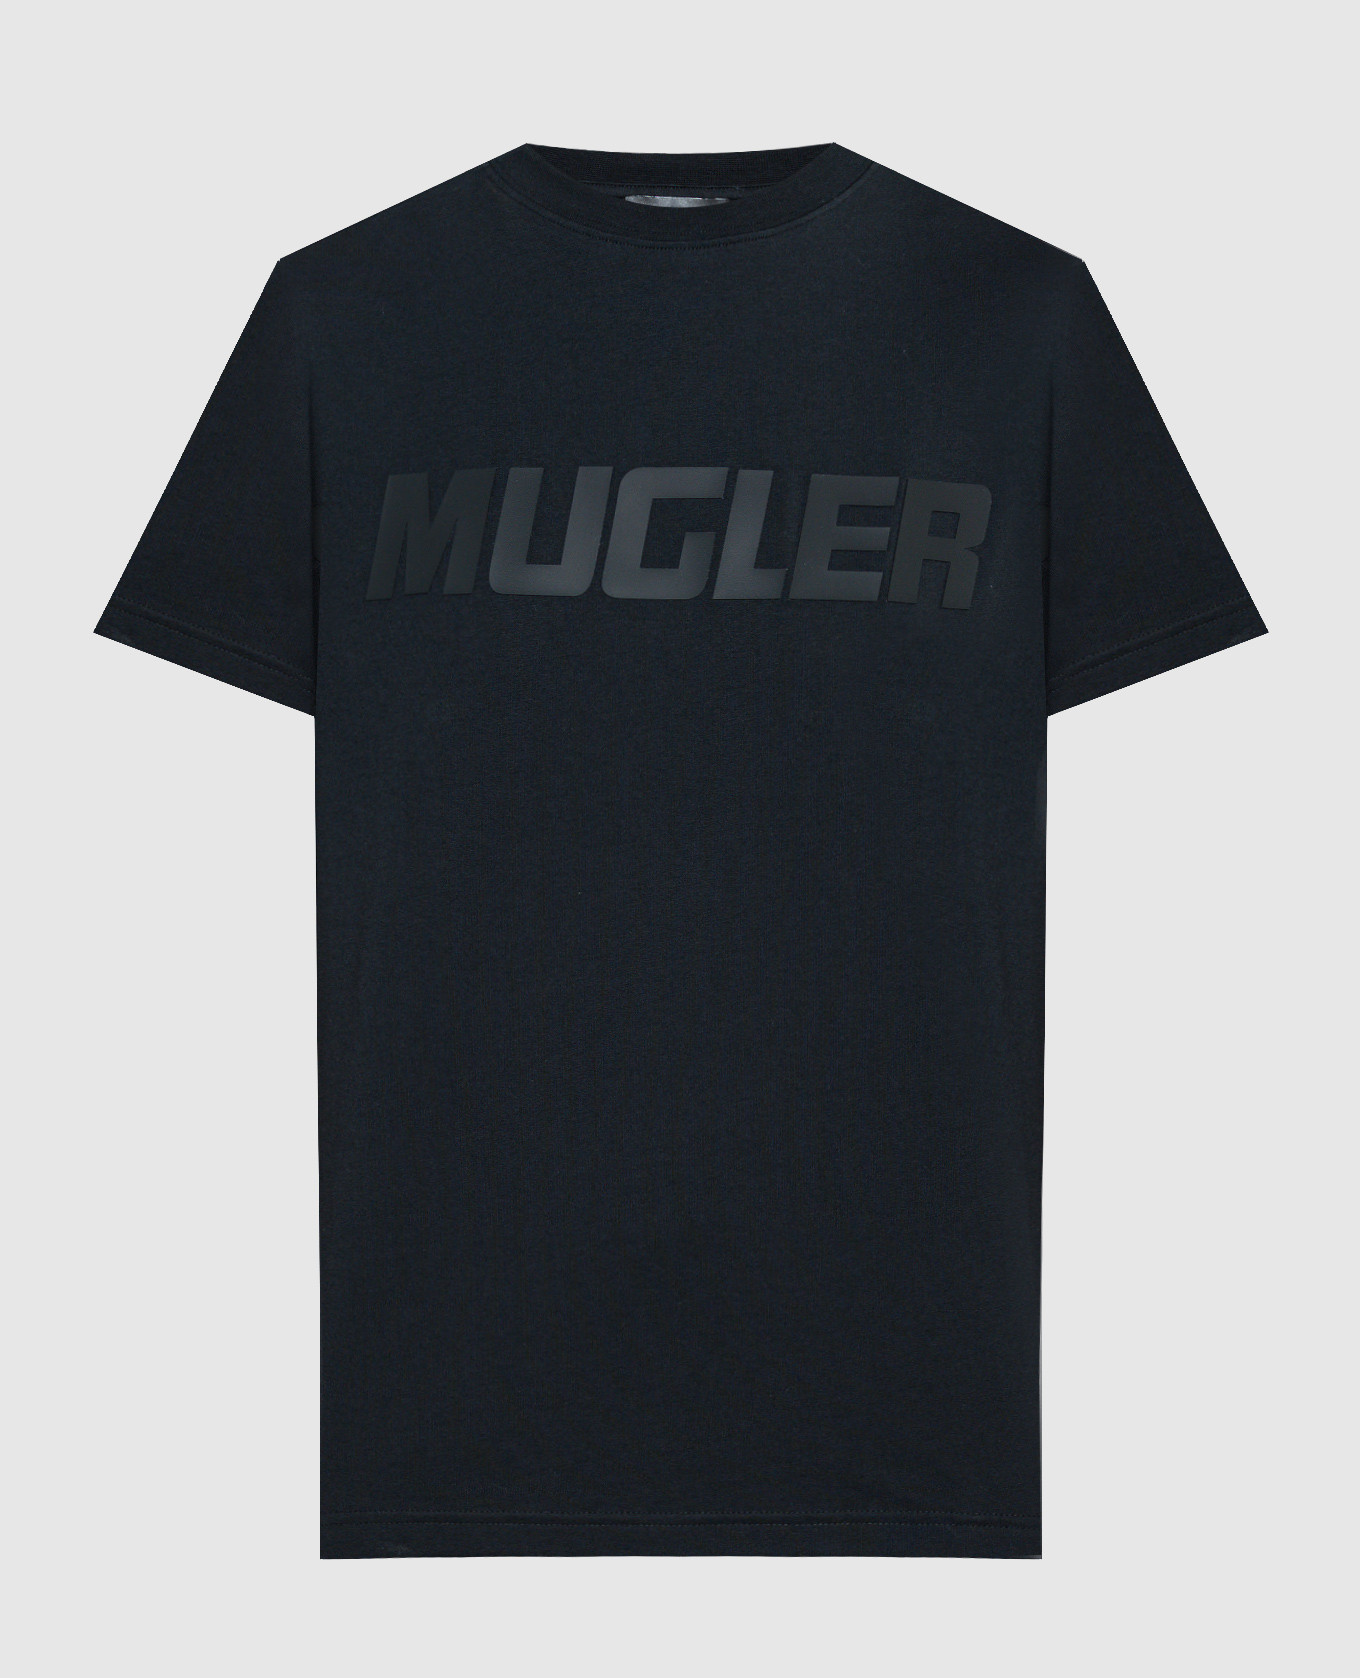 Black t-shirt with textured logo print